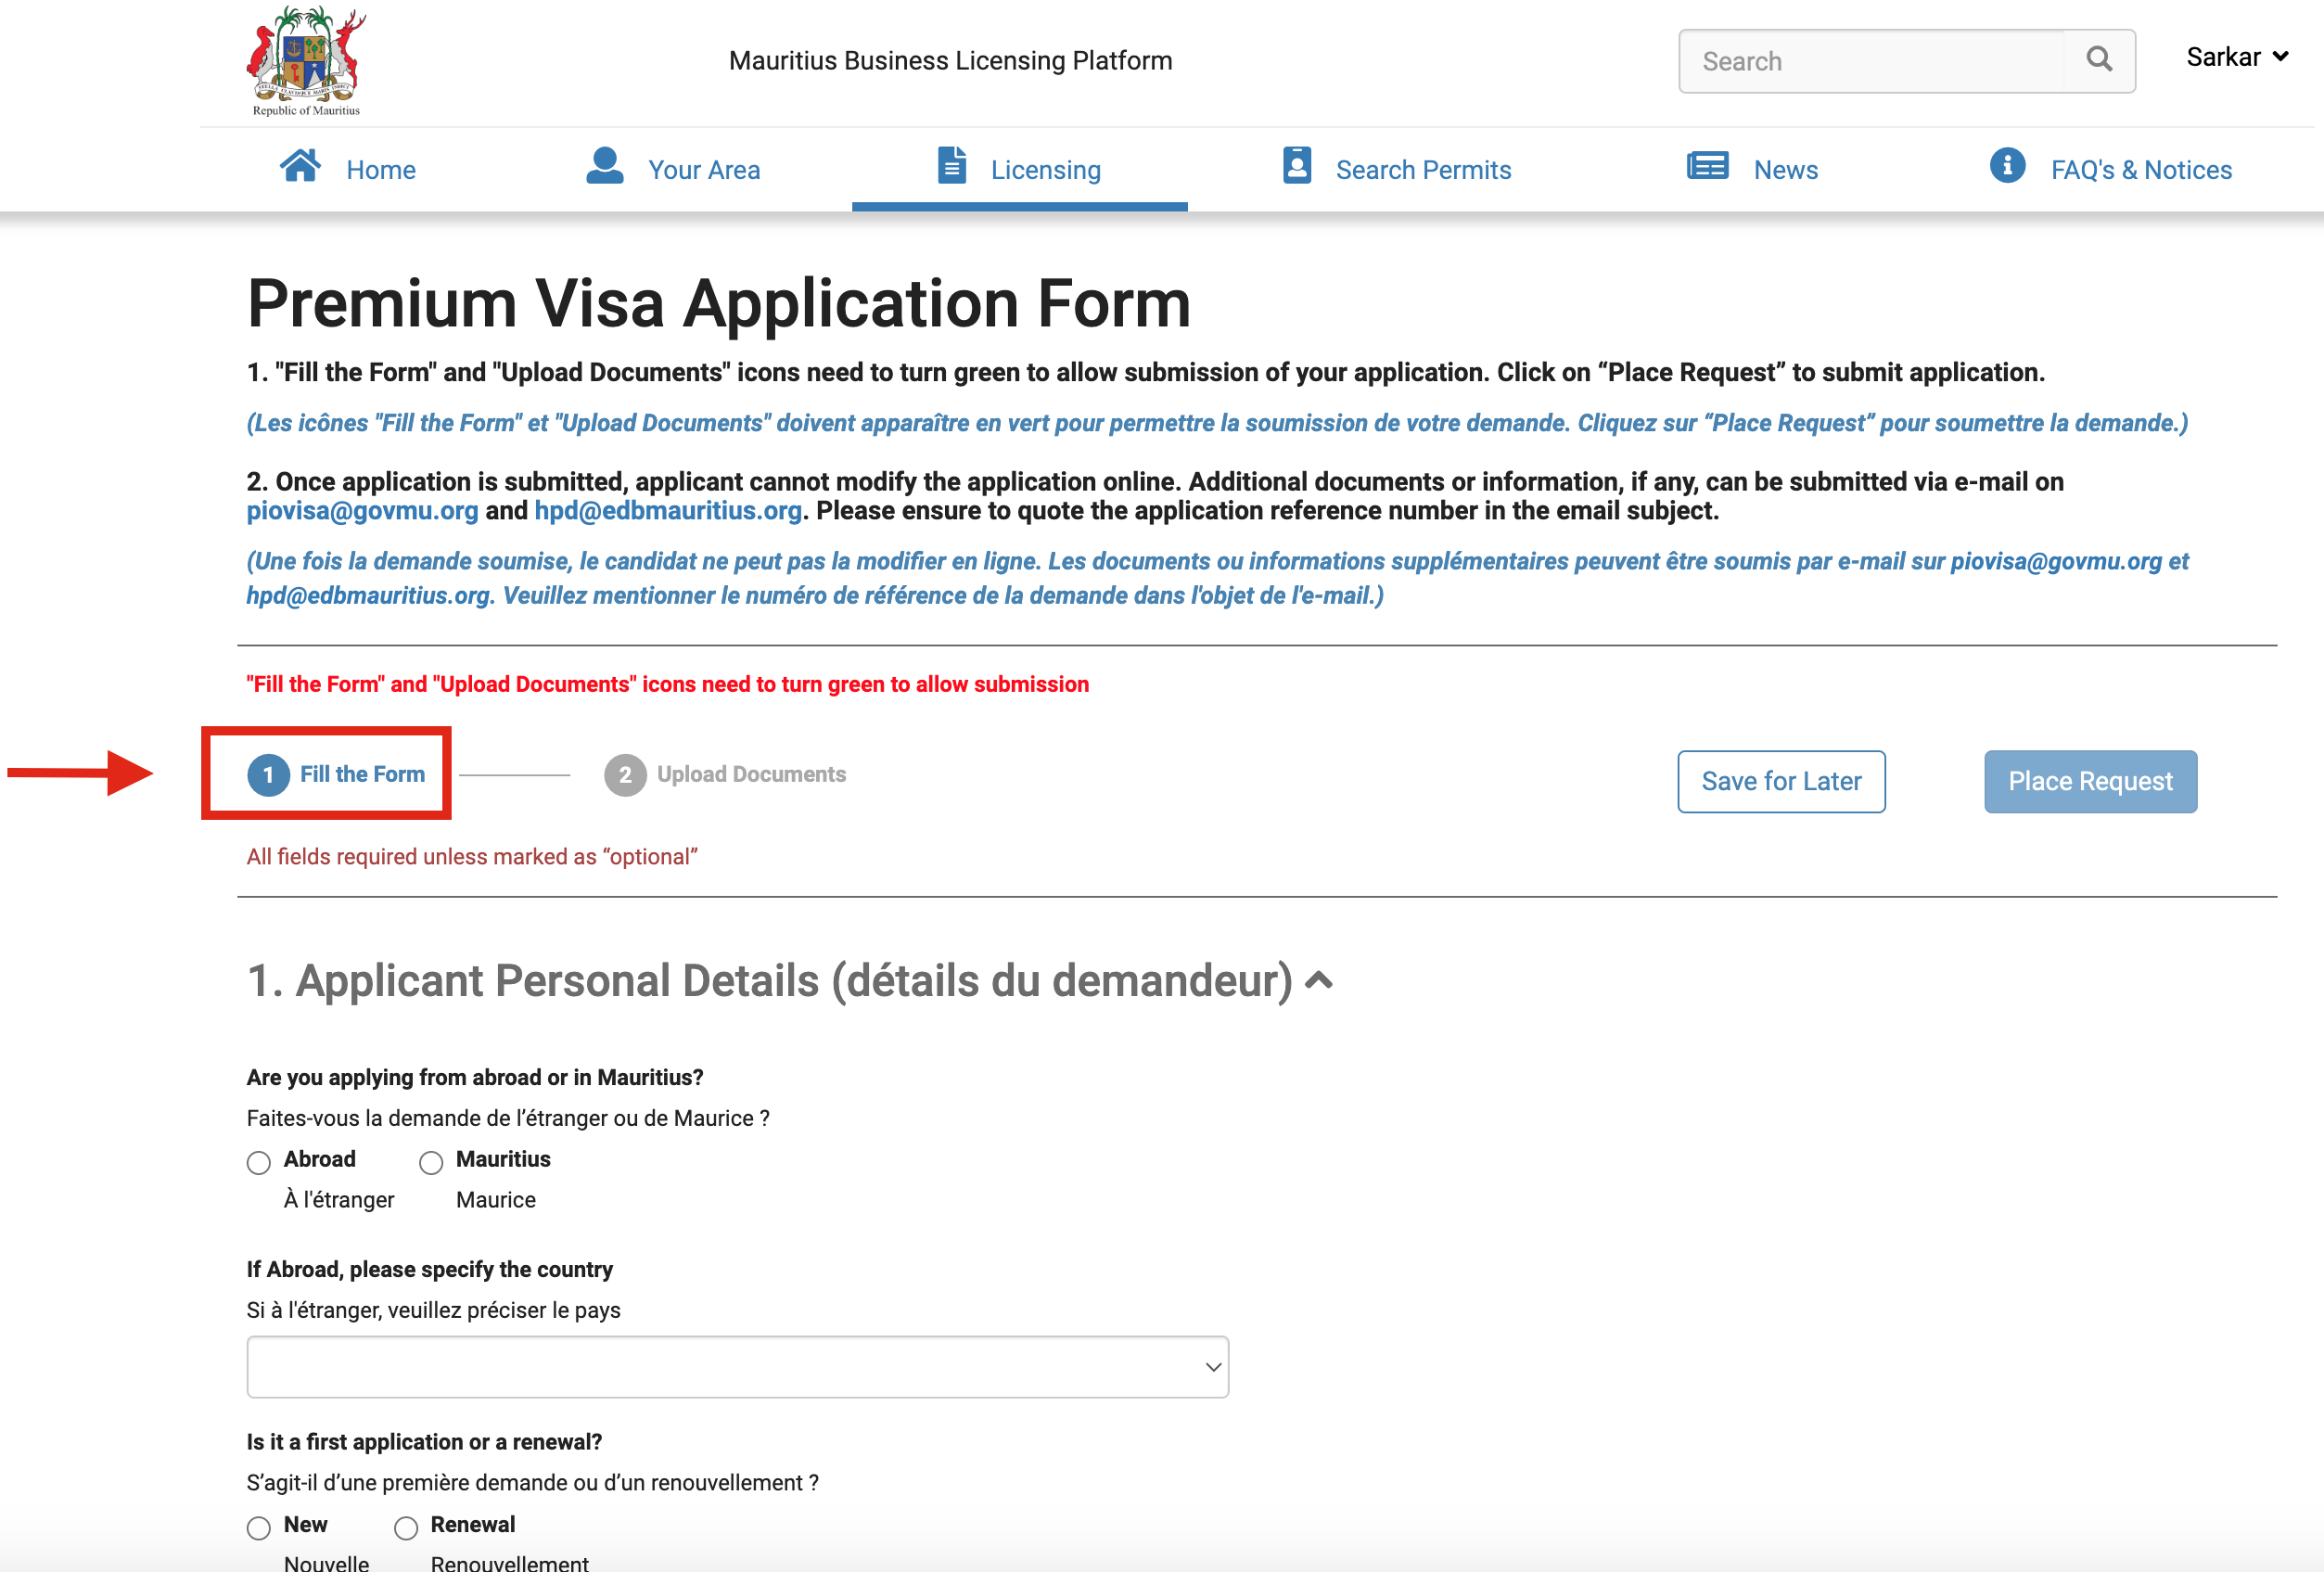 Fill the online form, Premium Visa Application